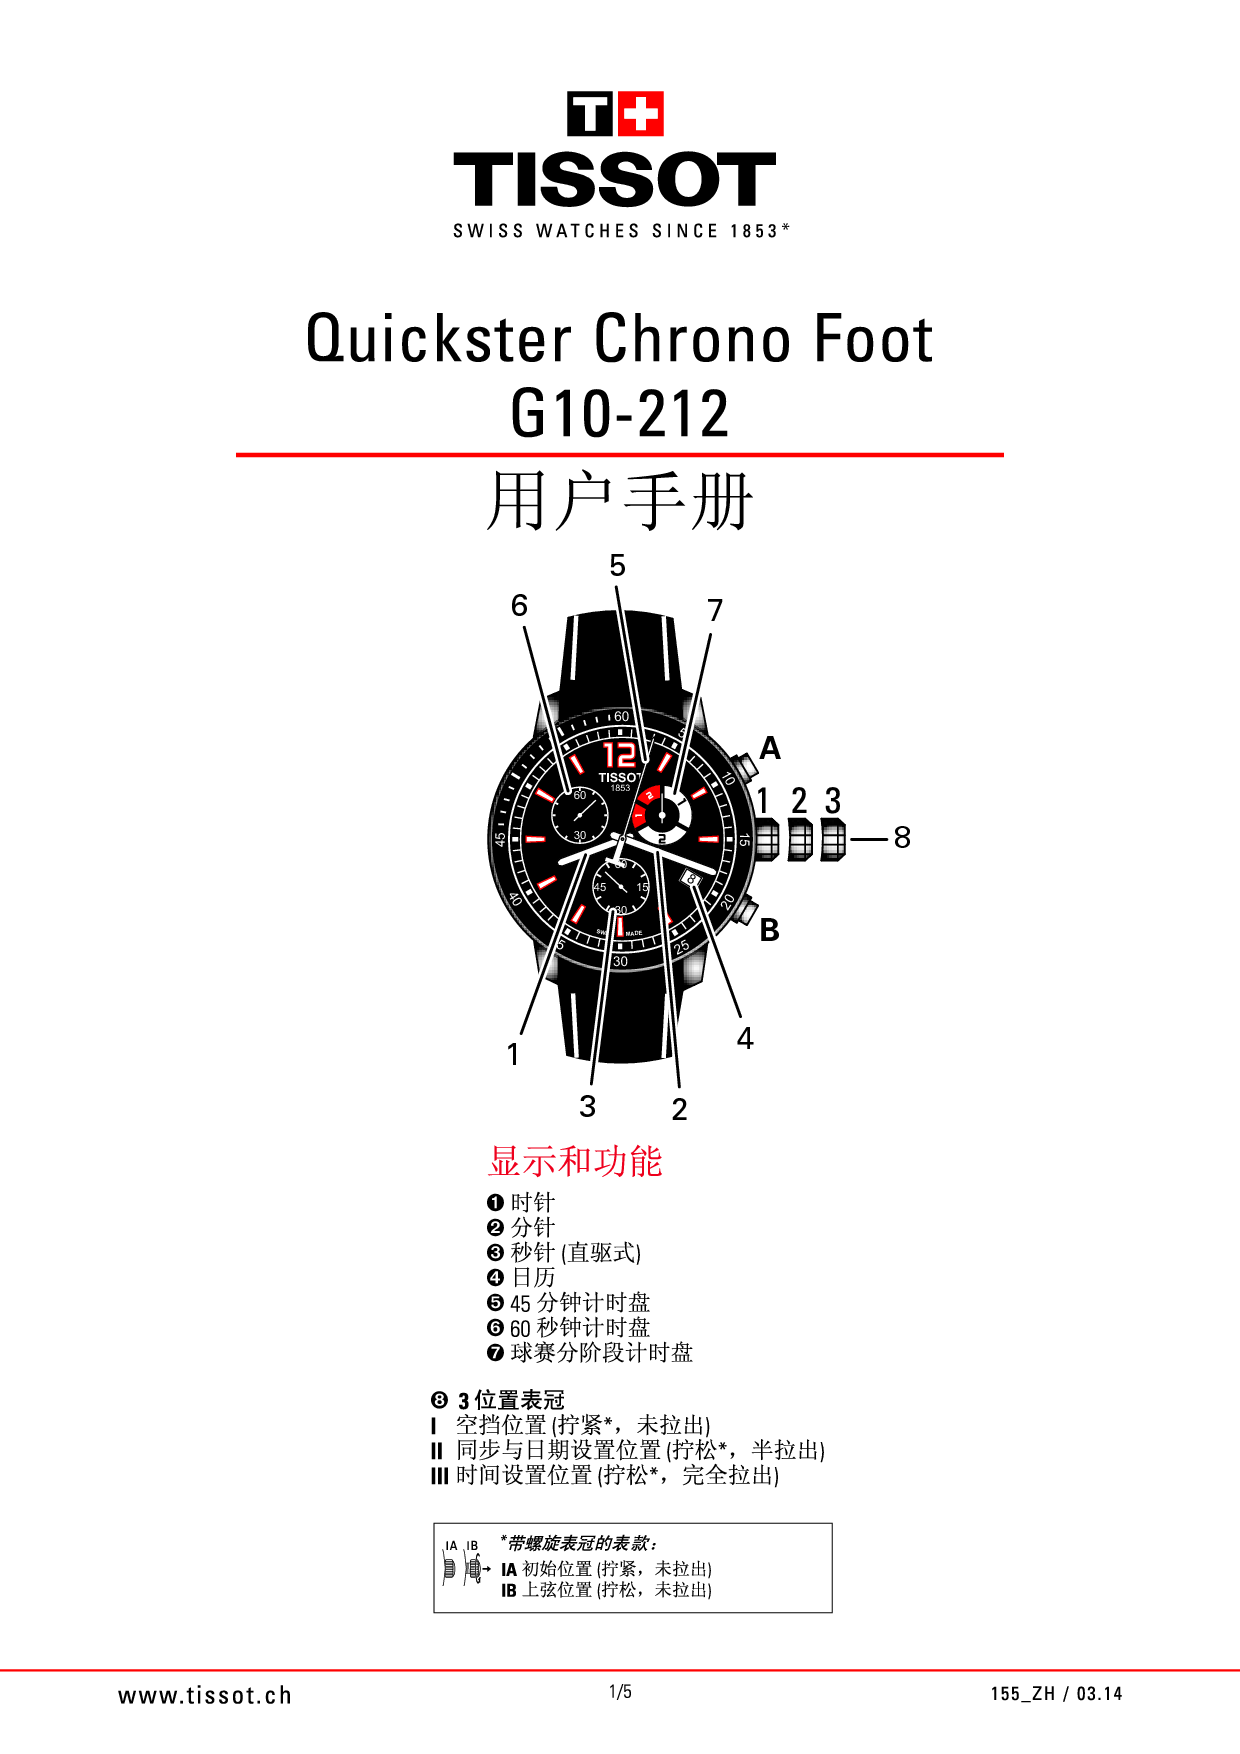 天梭 Tissot Quickster Chrono Foot G10-212 用户手册 封面